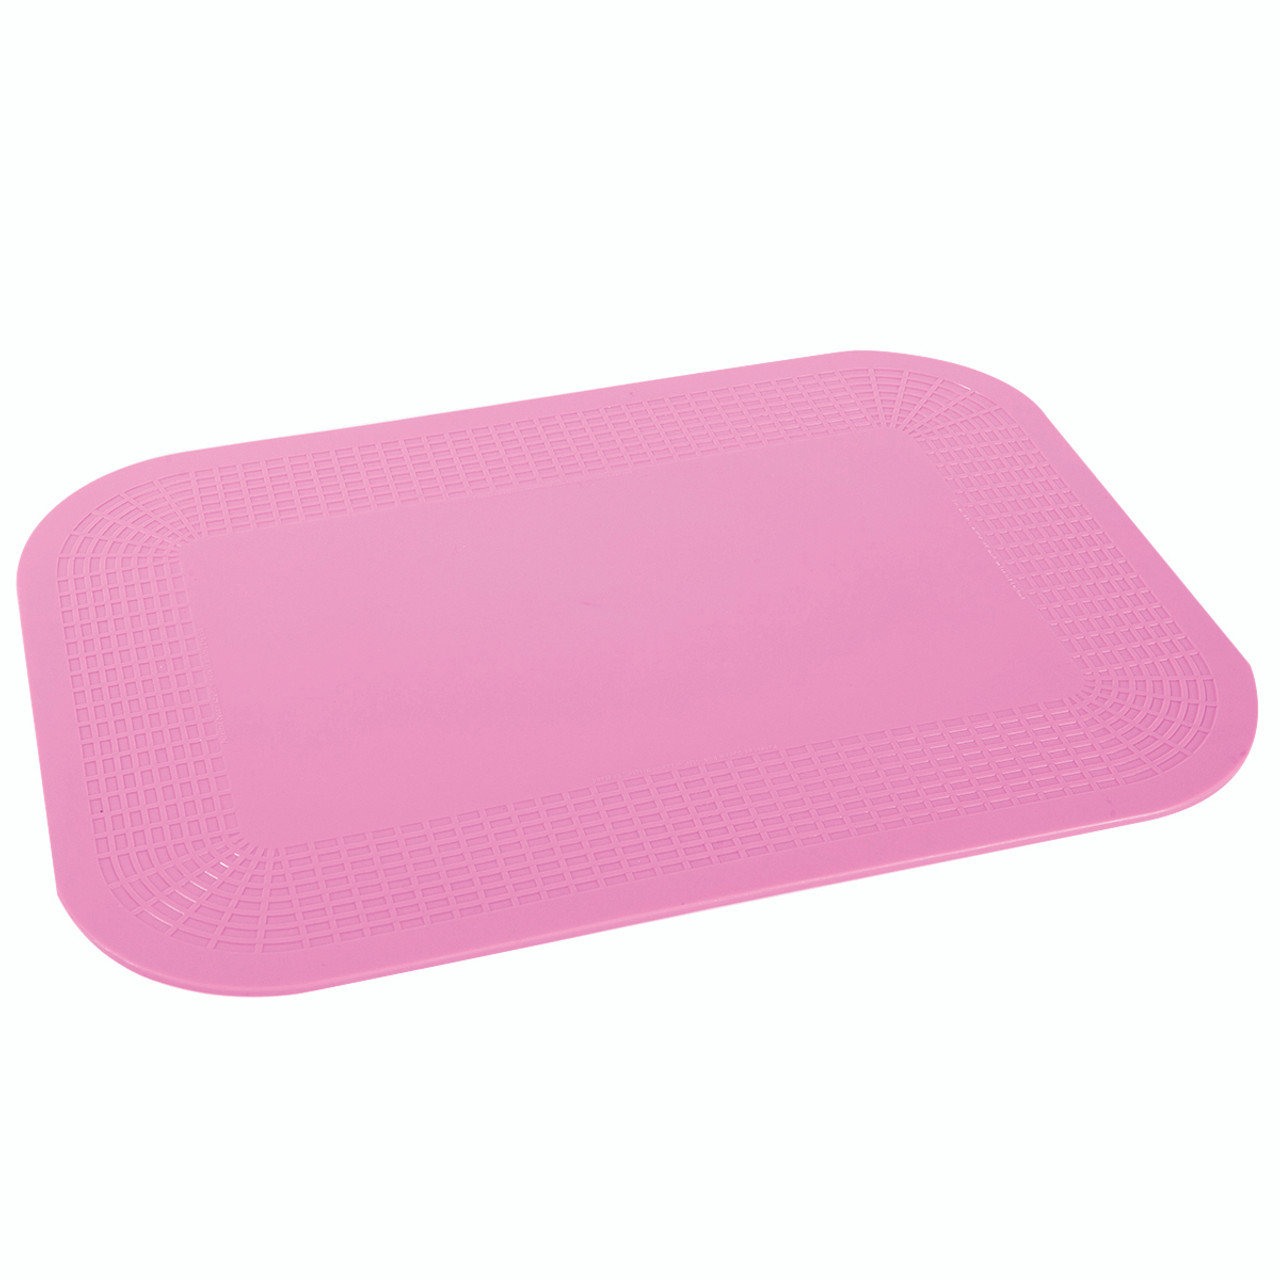 Dycem¨ non-slip rectangular pad, 15"x18", pink